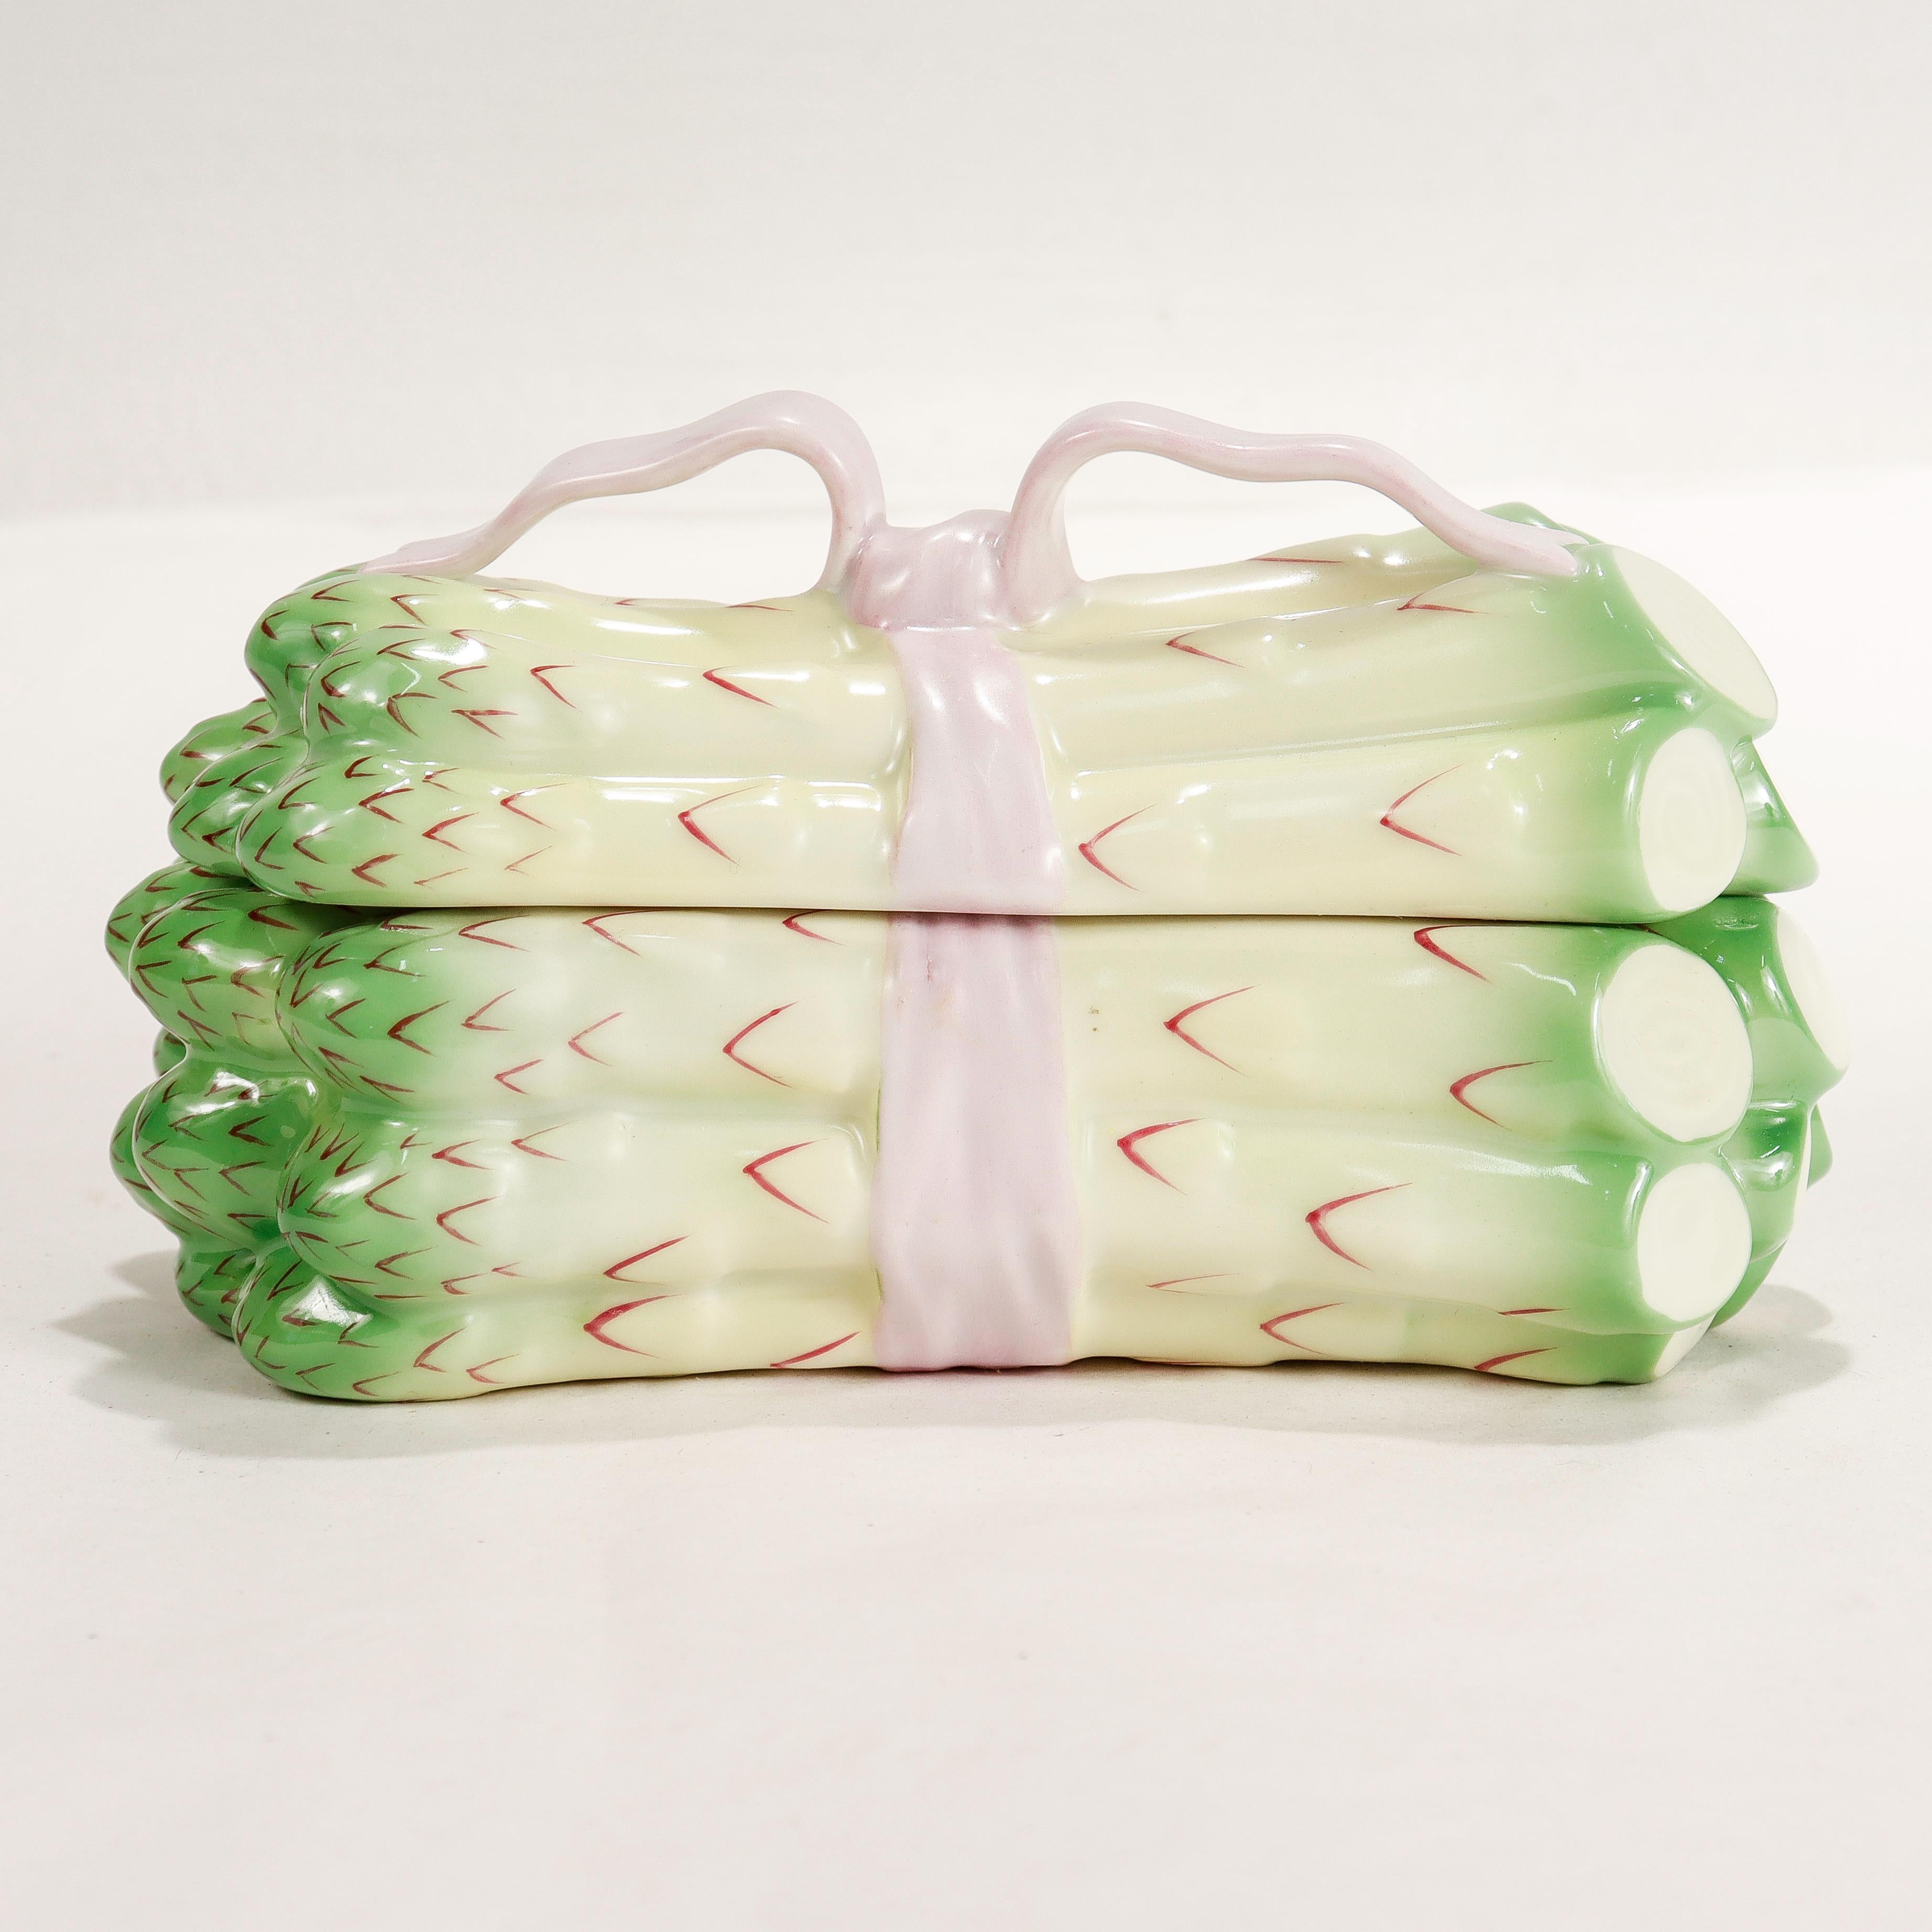 Herend Porcelain Figural Asparagus Covered Box Model No. 6070/C  For Sale 1